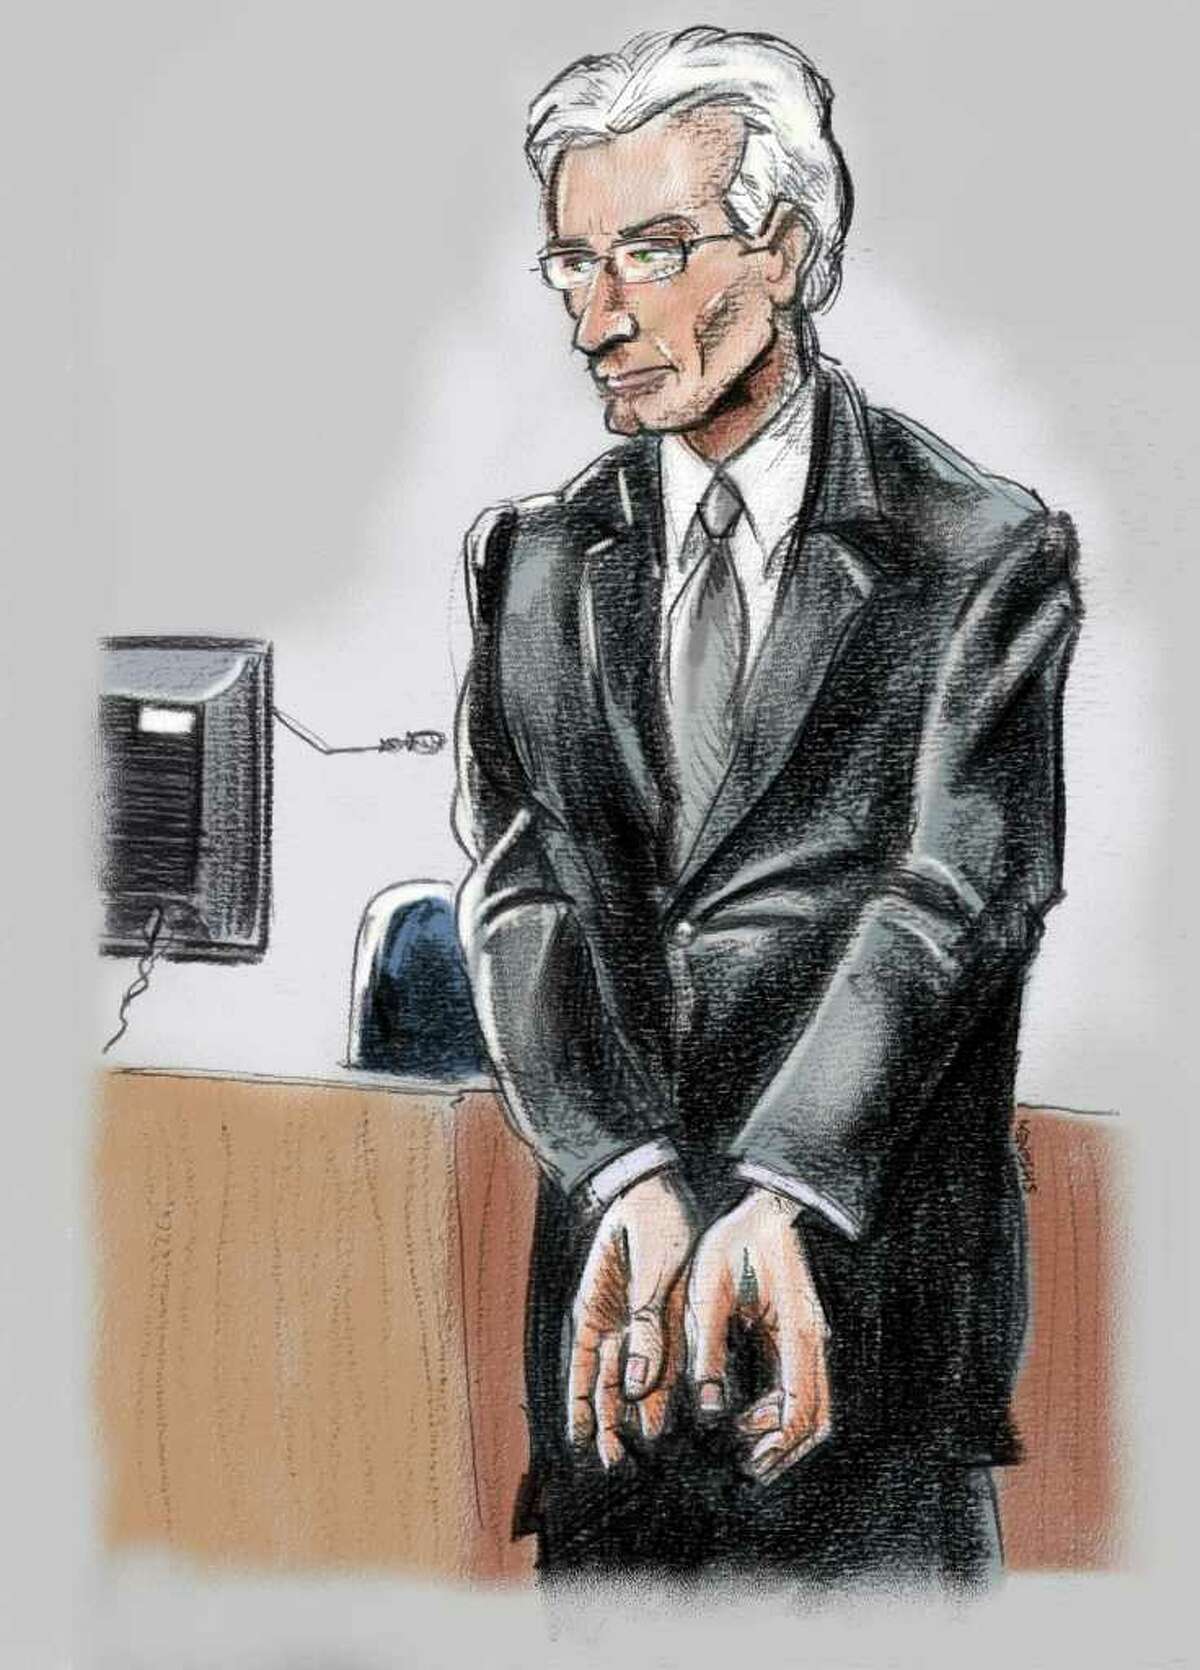 James Davis at Stanford trial